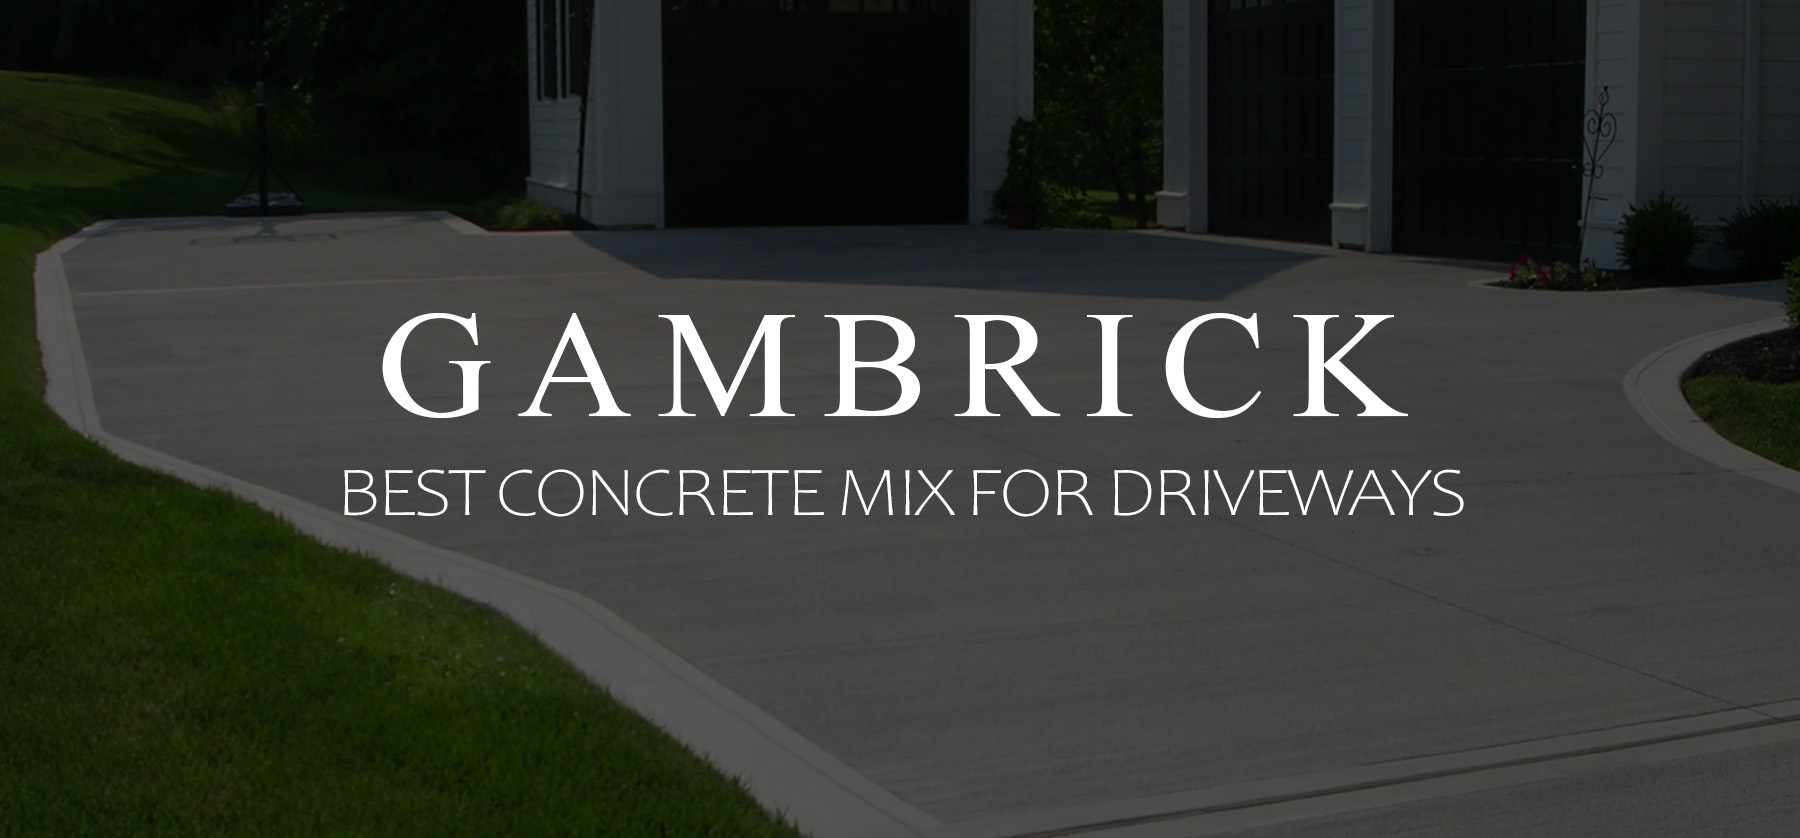 best concrete mix for driveways banner pic